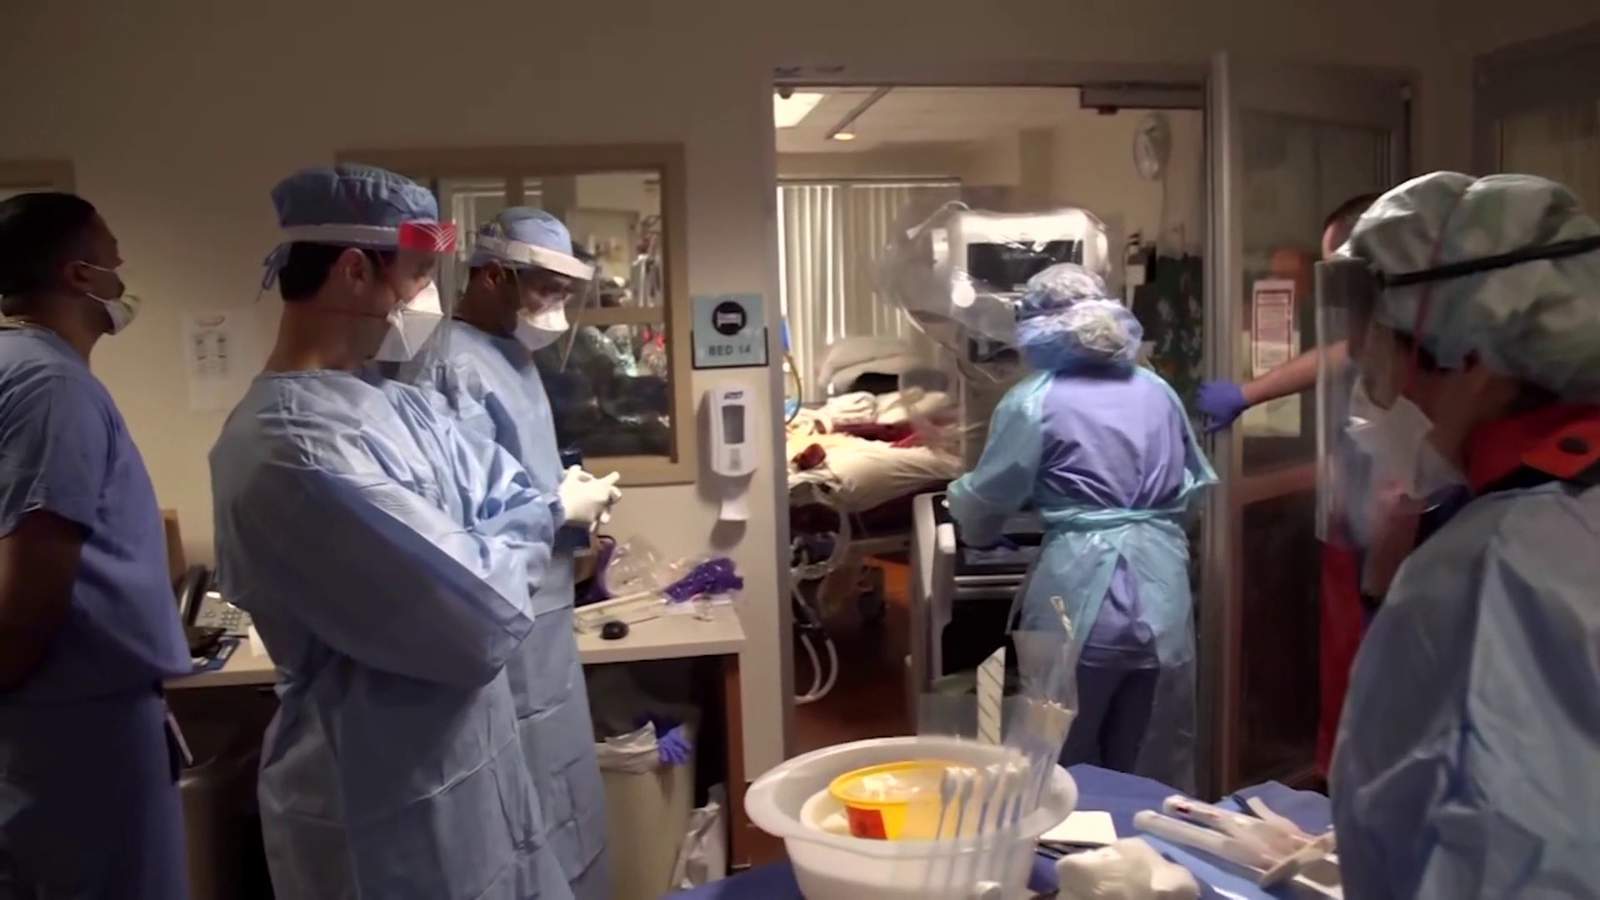 Inside look: San Antonio Methodist Hospital overwhelmed with COVID-19 patients